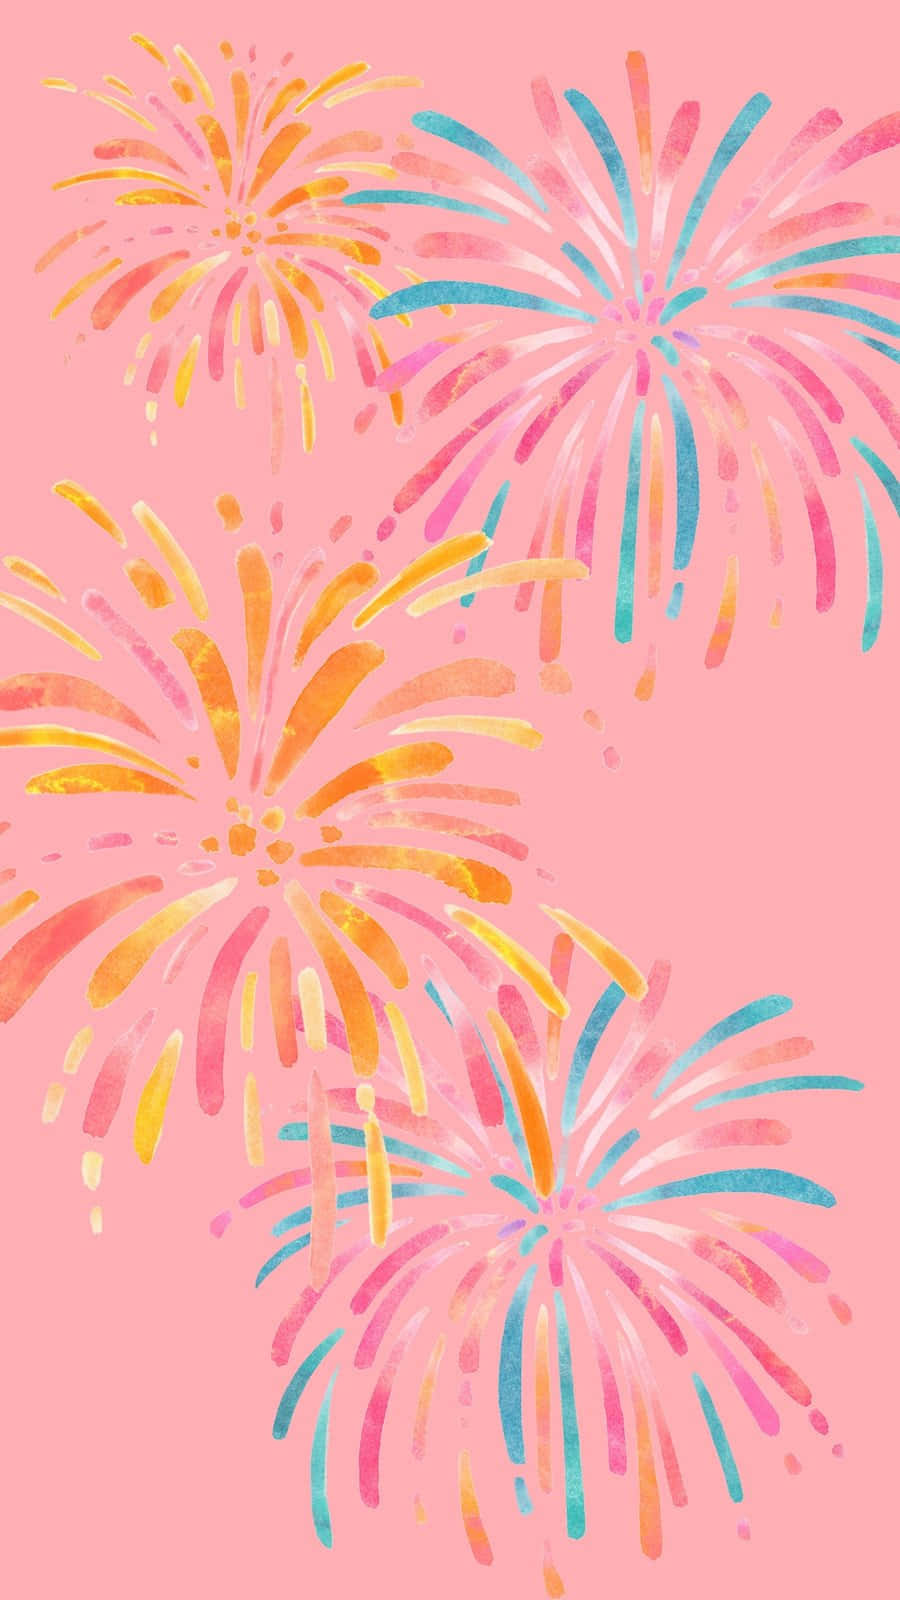 Pastel Color Fireworks Graphic Art Wallpaper